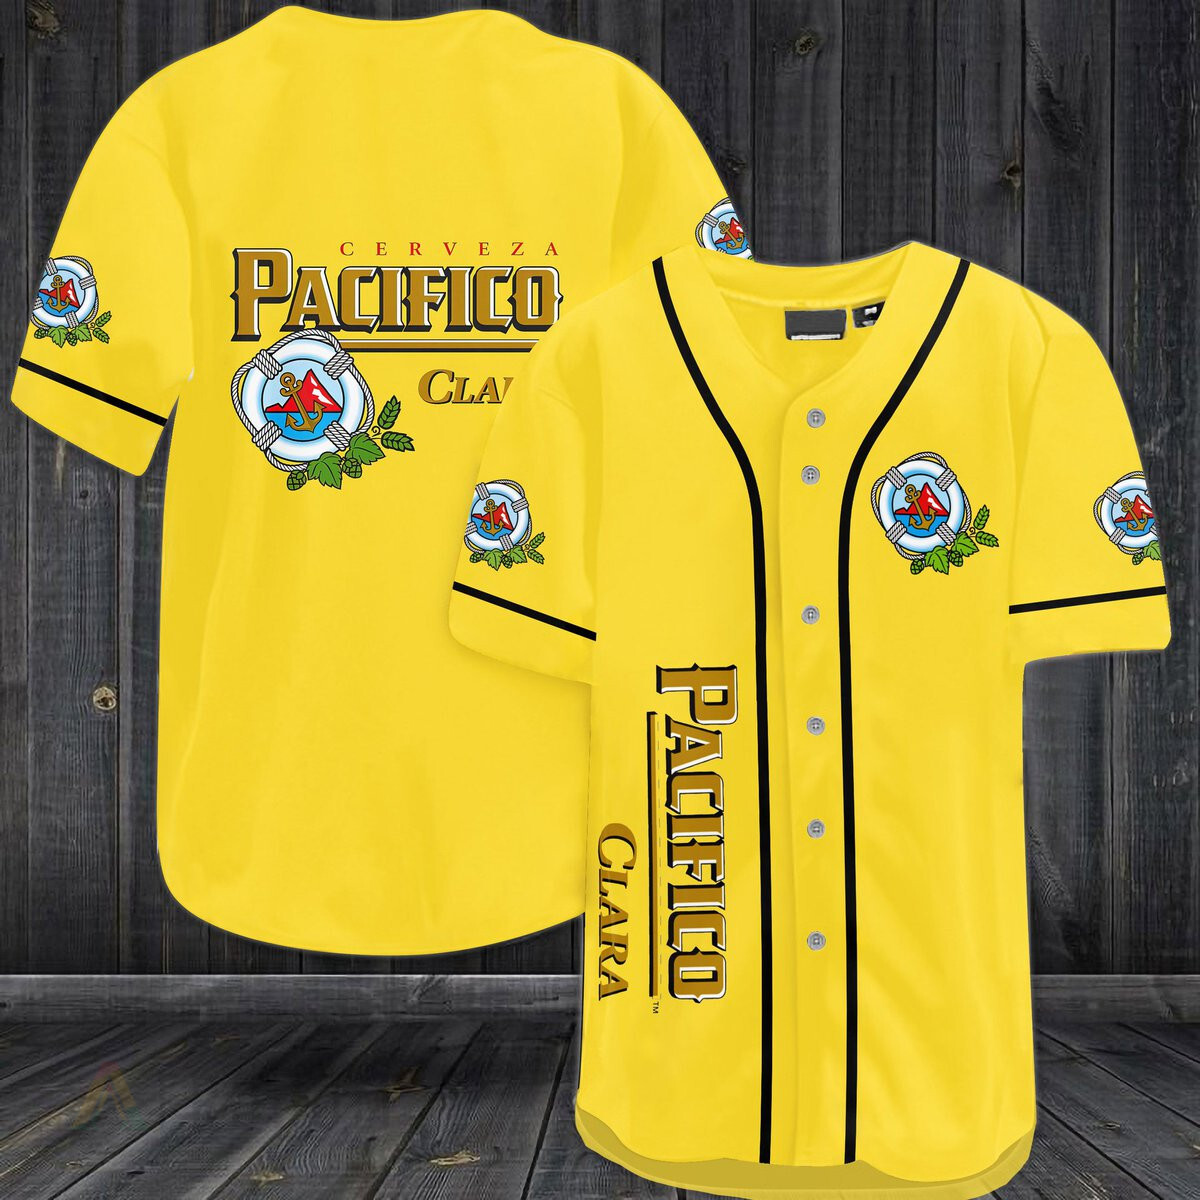 Buy Yellow Pacifico Beer Baseball Jersey - Meteew